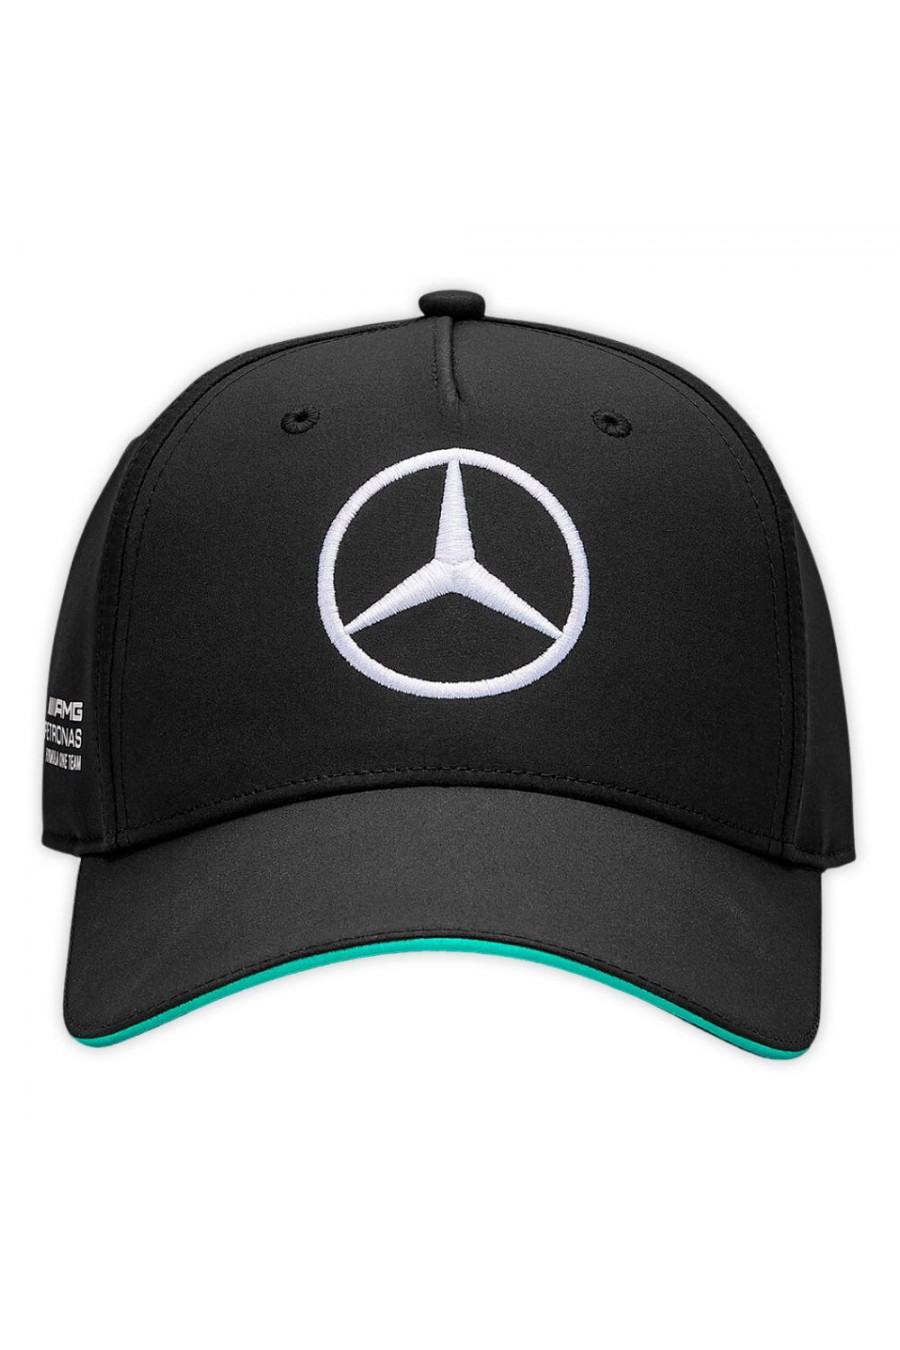 Gorra Mercedes F1 Negra